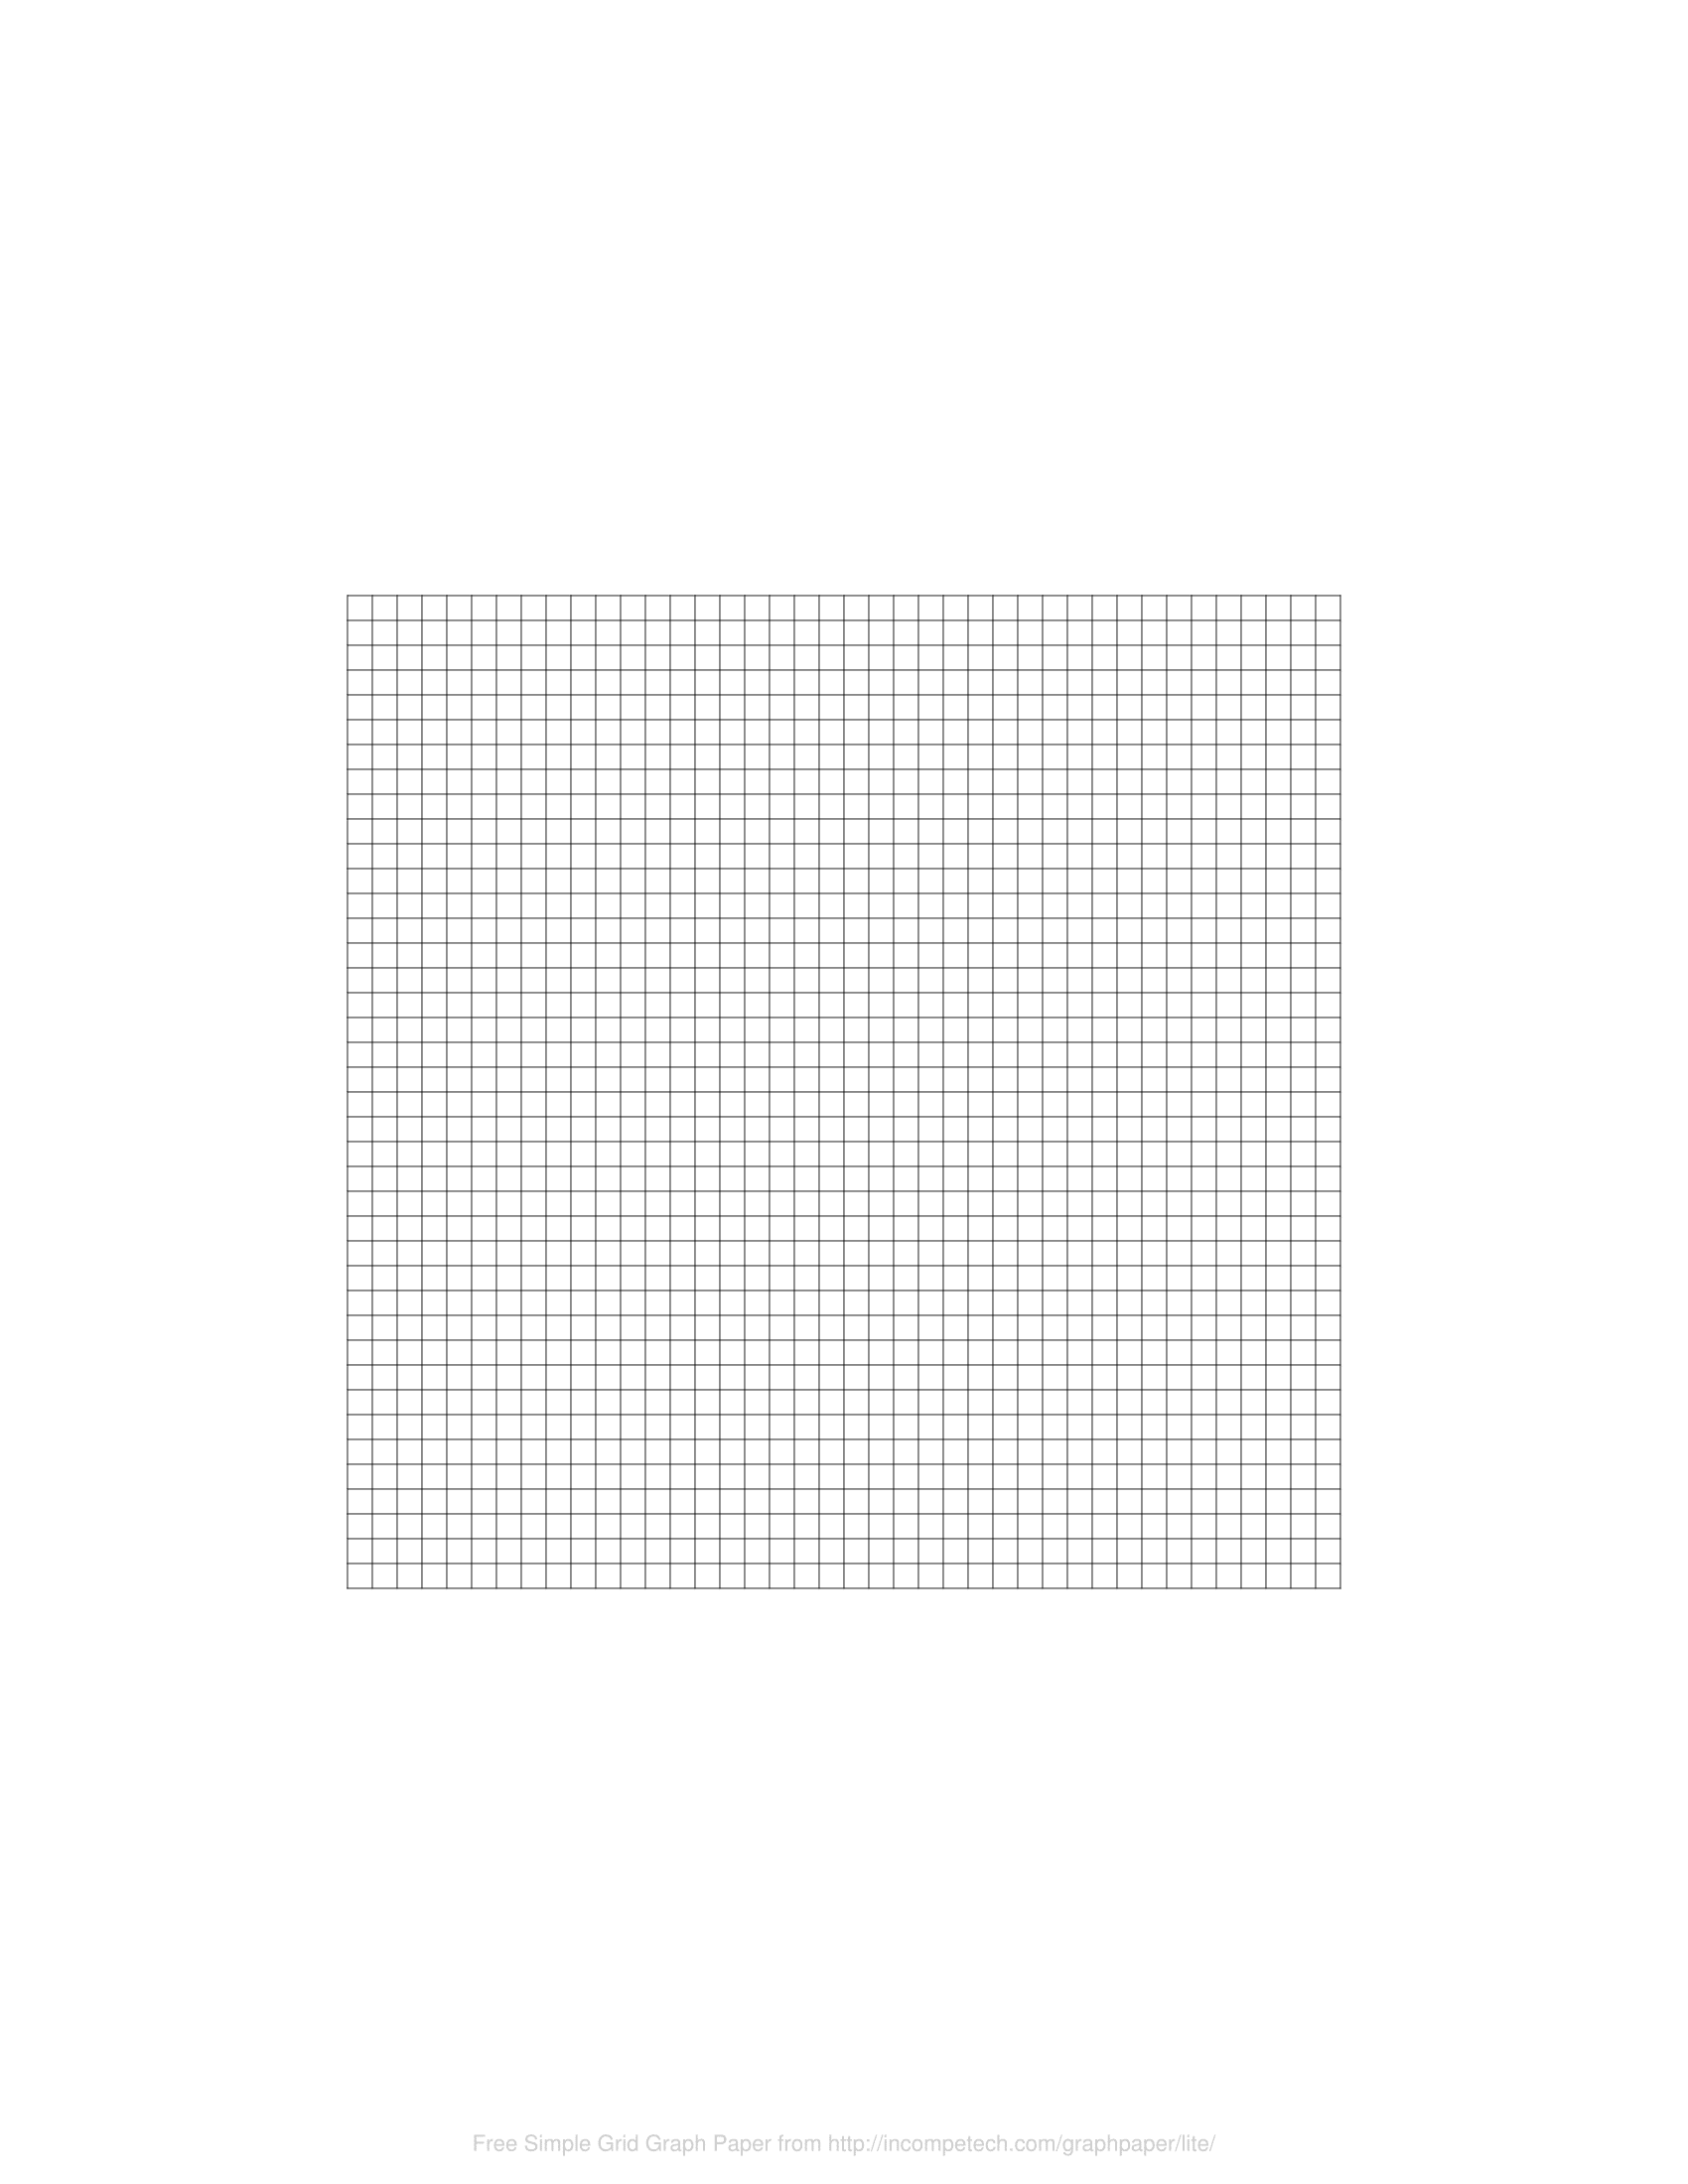 grid pattern png